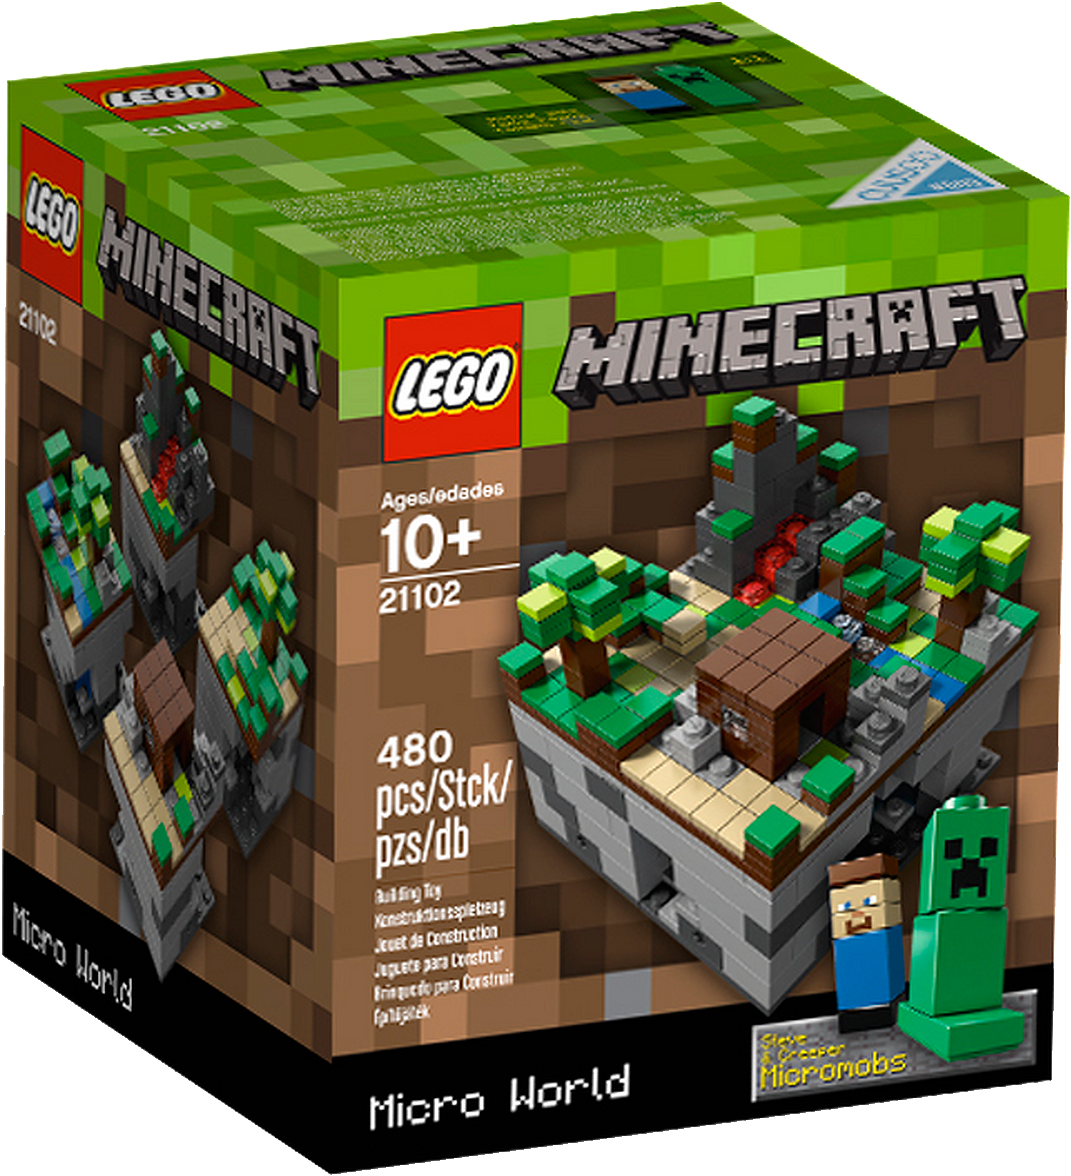 LEGO 21153 21155 21162 Minecraft The Creeper Mine Wool Farm Taiga Adventure  Lot